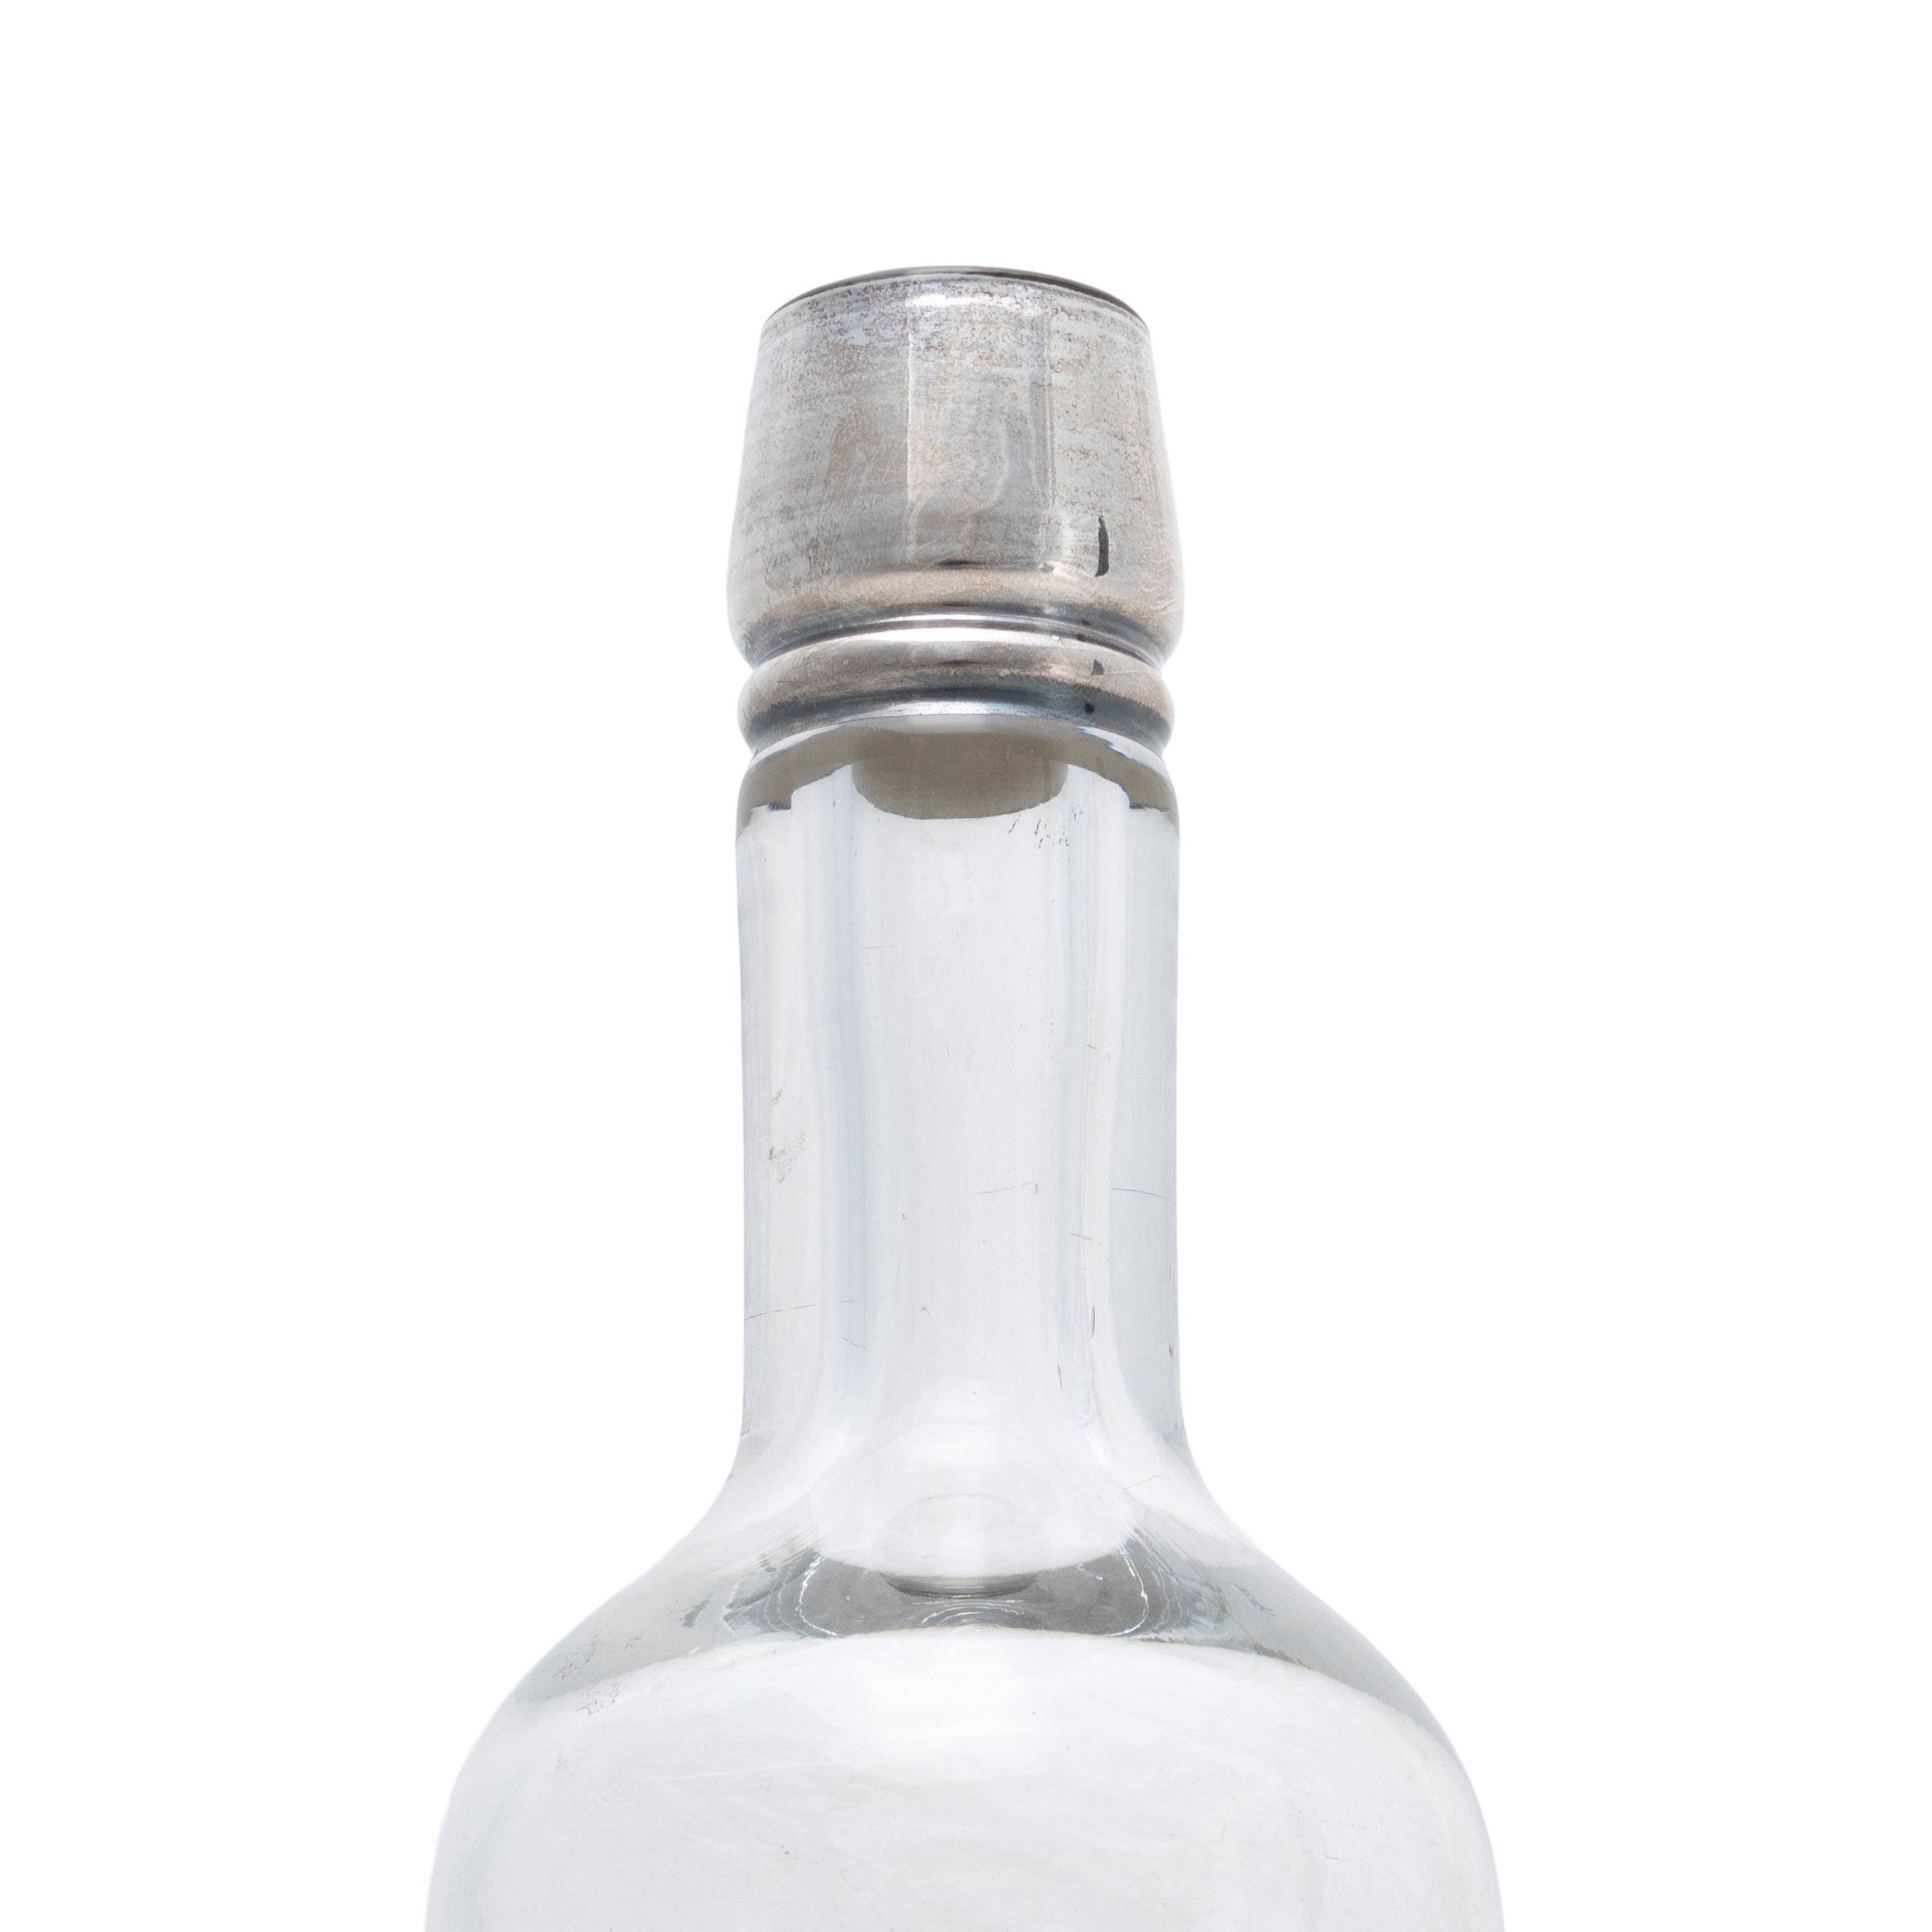 Silver Overlay Back Bar Bottle